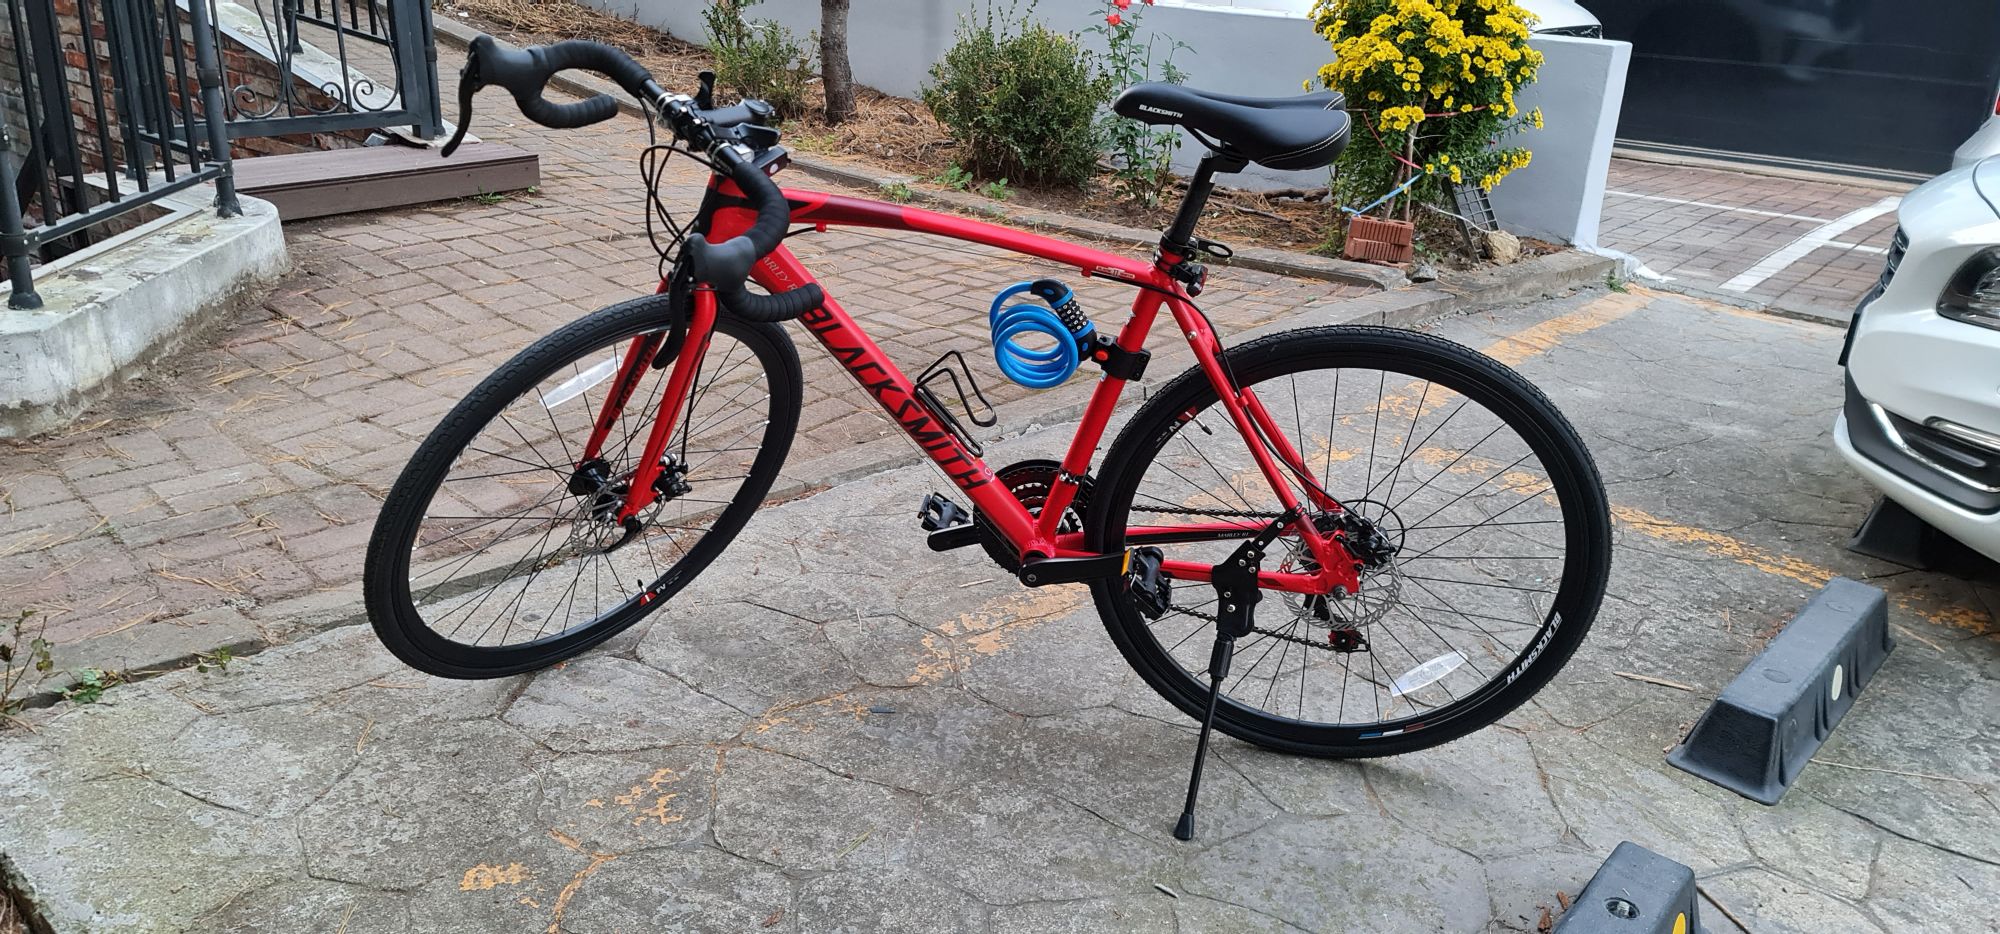 Red screet racing bicycle